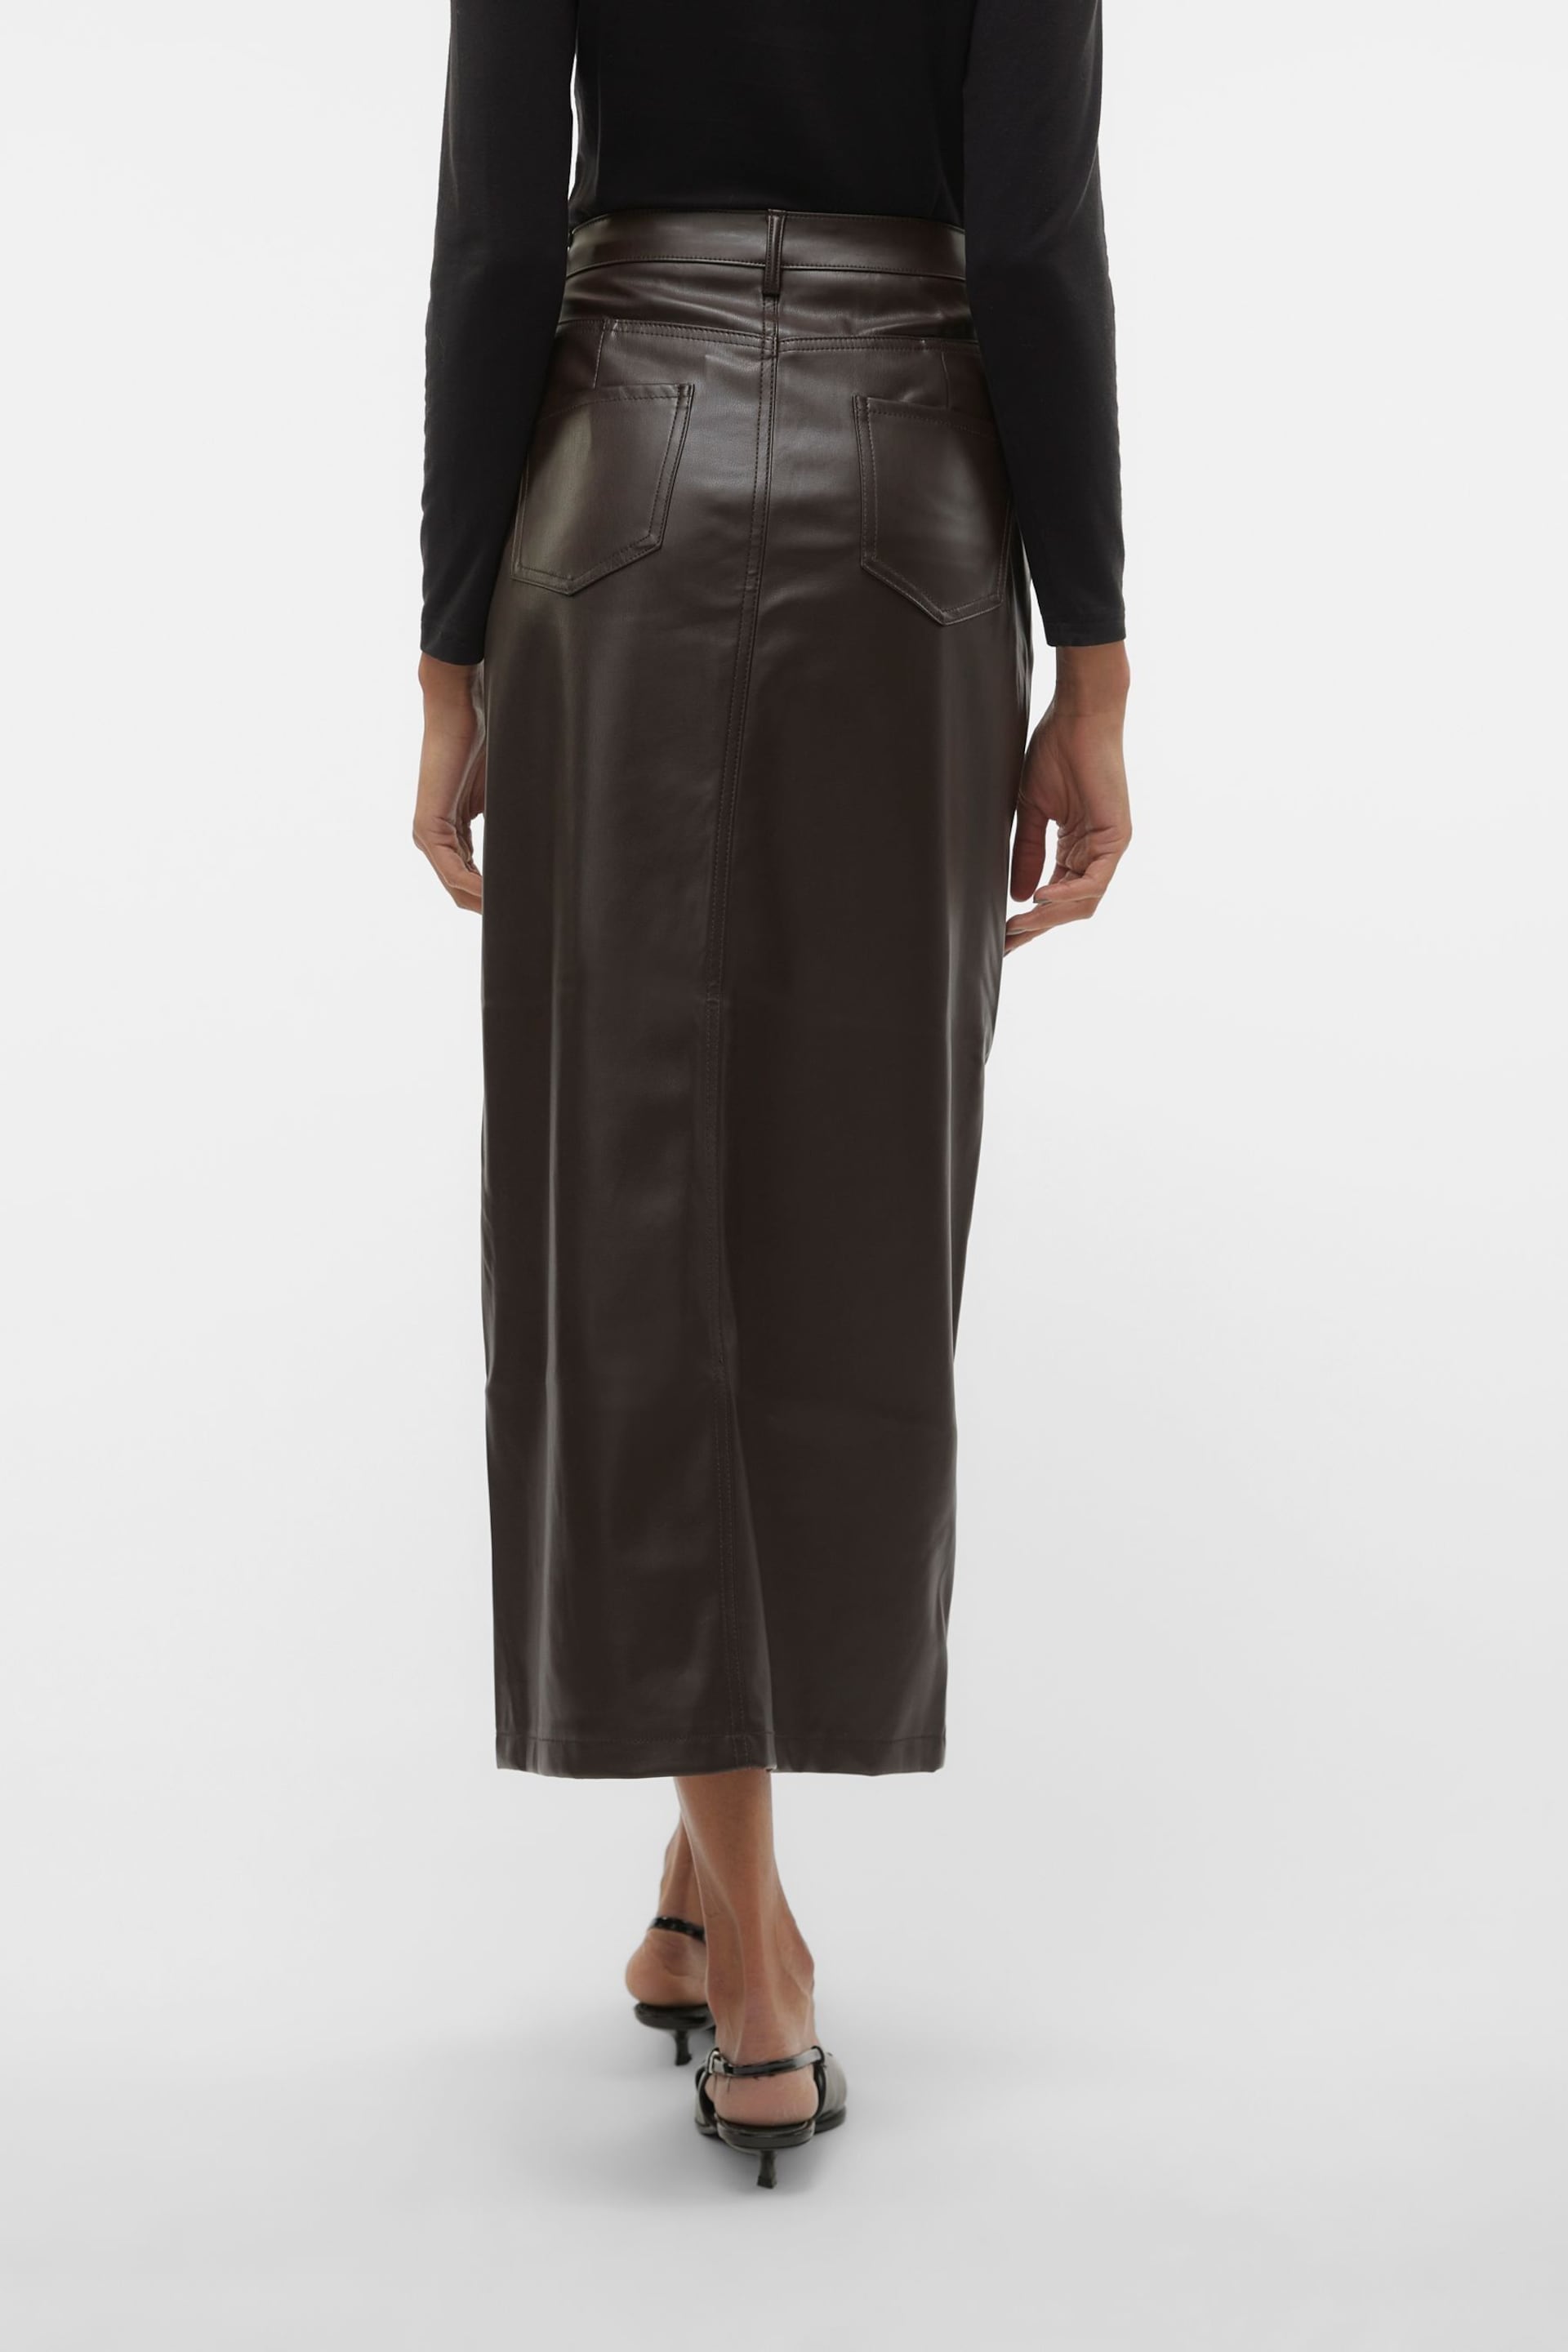 VERO MODA Brown Faux Leather Midi Skirt - Image 2 of 7